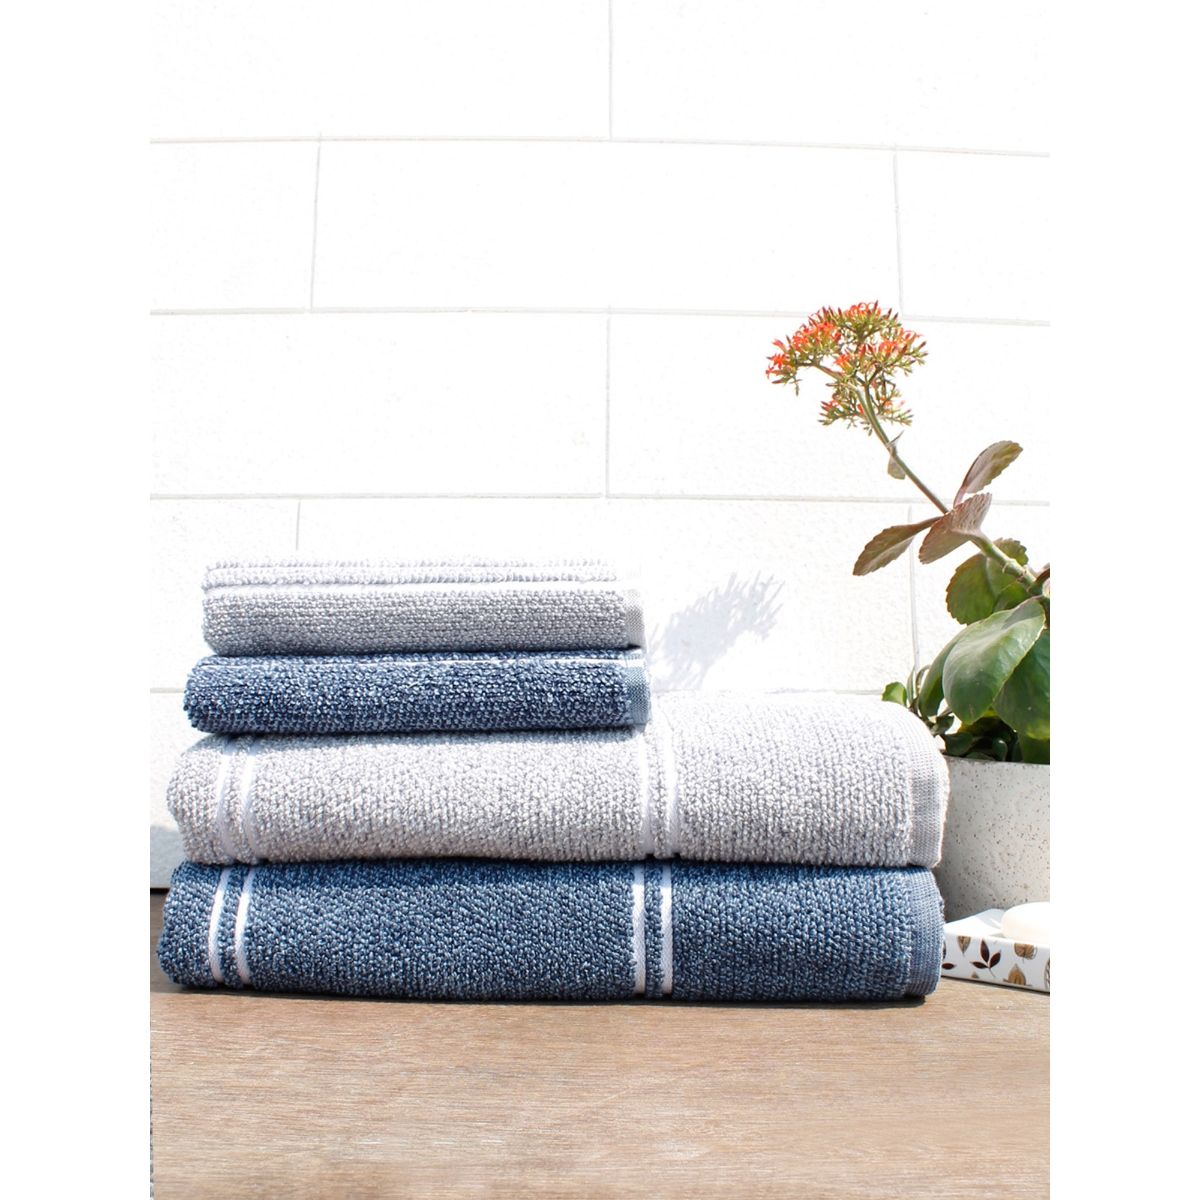 Two-Tone Towel 80 x 150 cm checked - Cawo 604 80/150 10 | FA